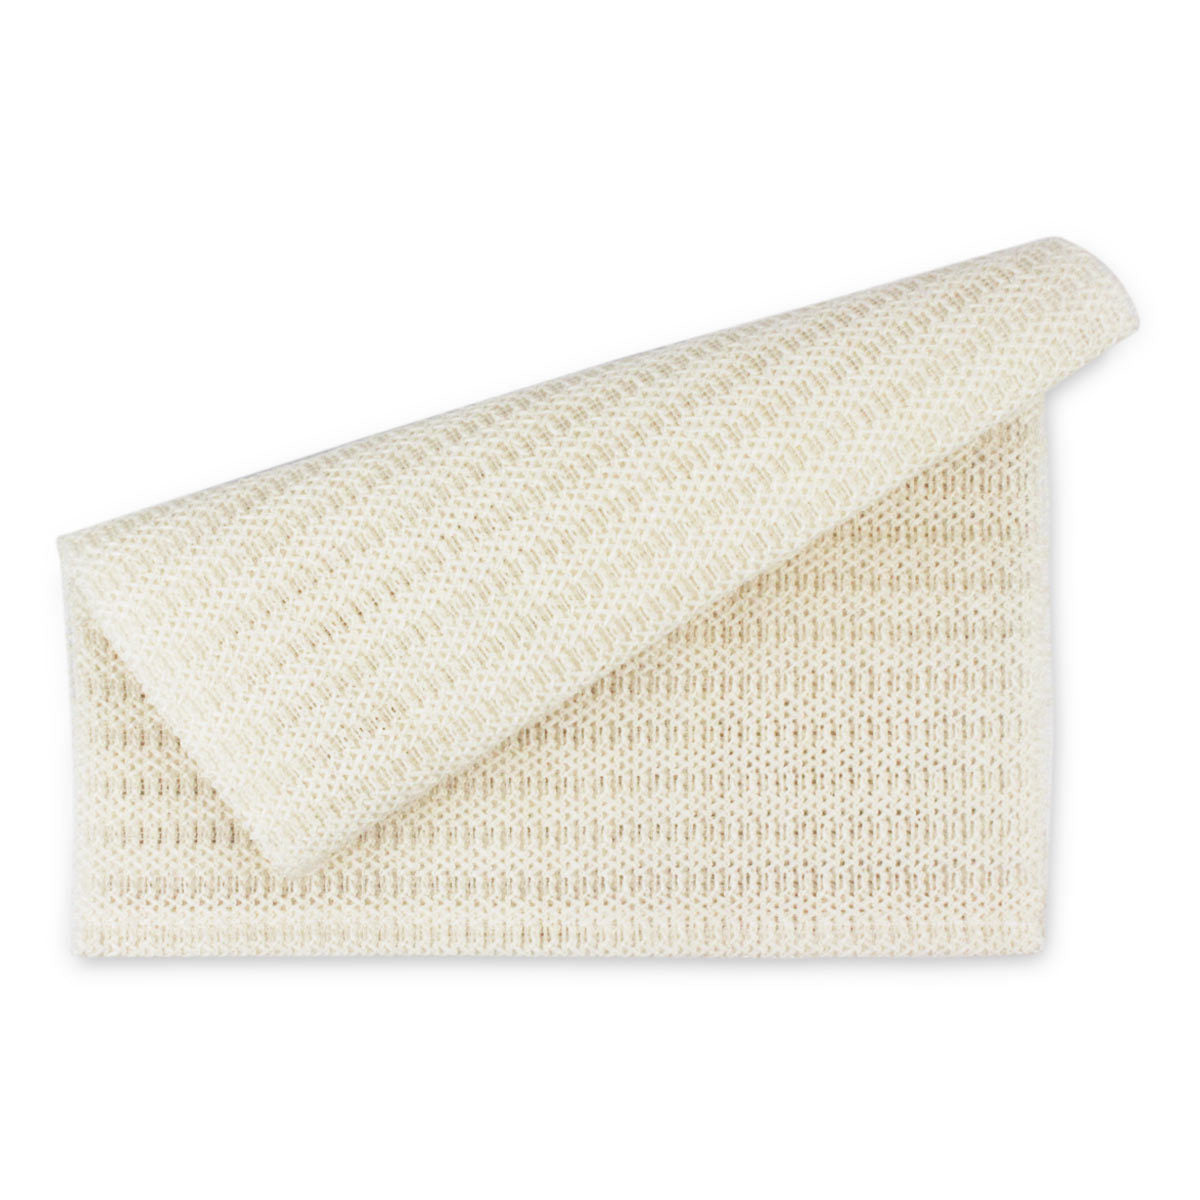 Primary image of Chidoriya Raw Silk Woven Net Wash Cloth 11 x 40  inches Cloth